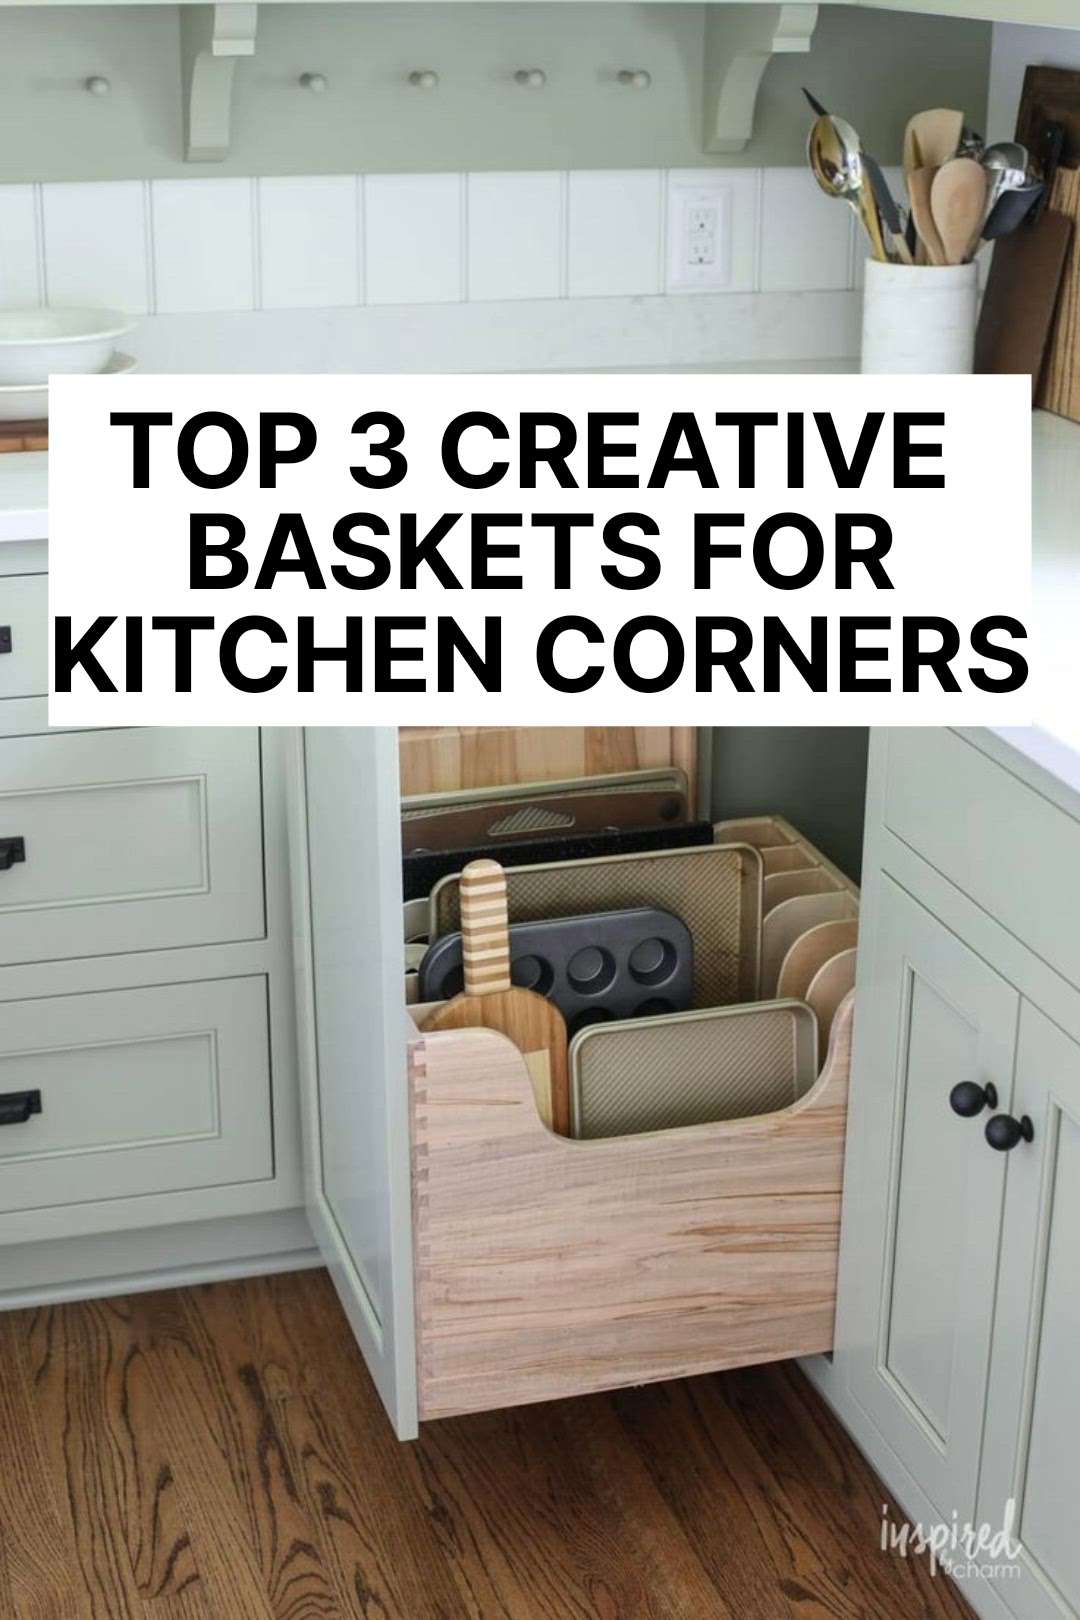 Top 3 creative basketsfor kitchen corners.
Top 3 Kitchen ideas for modern homes.
#creatorsofkolo #top3 #kitchenideas #modernhomes #ideas #kitchen #tips 1